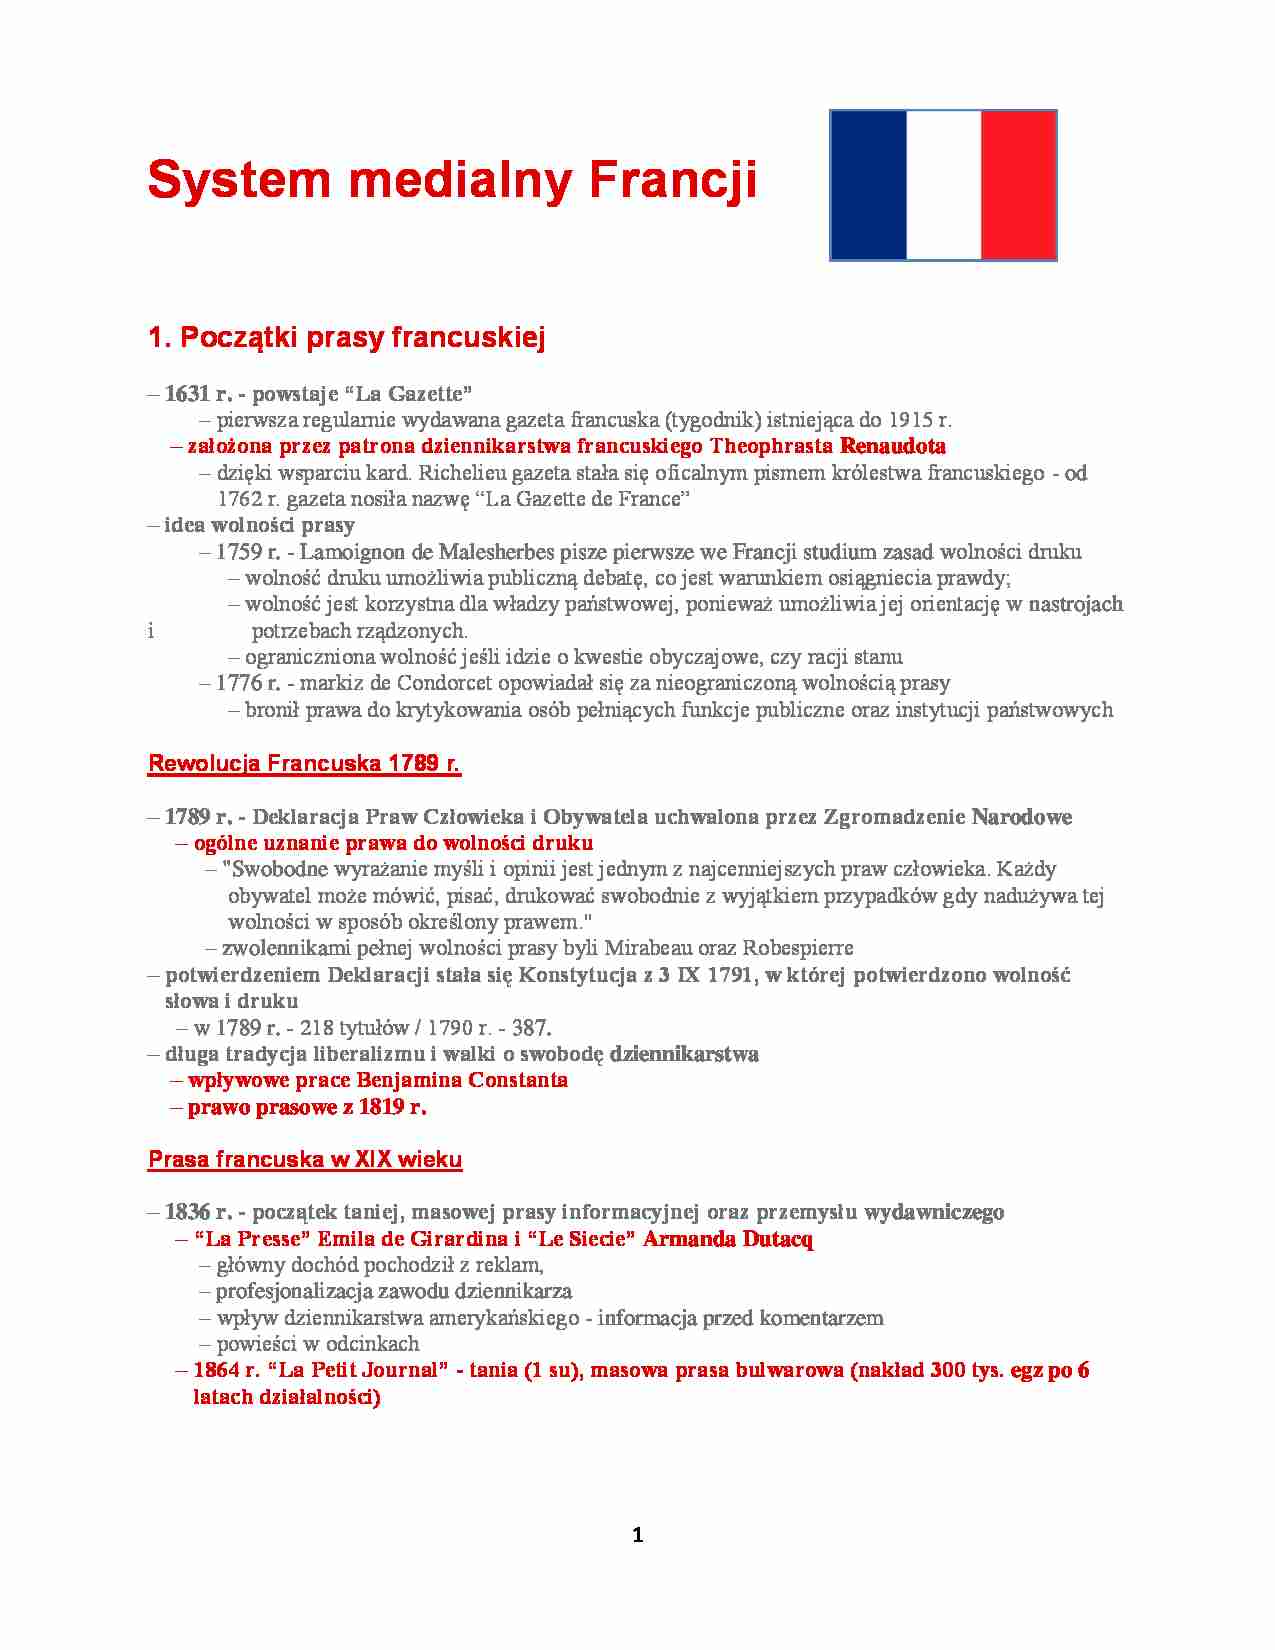 System medialny Francji - strona 1